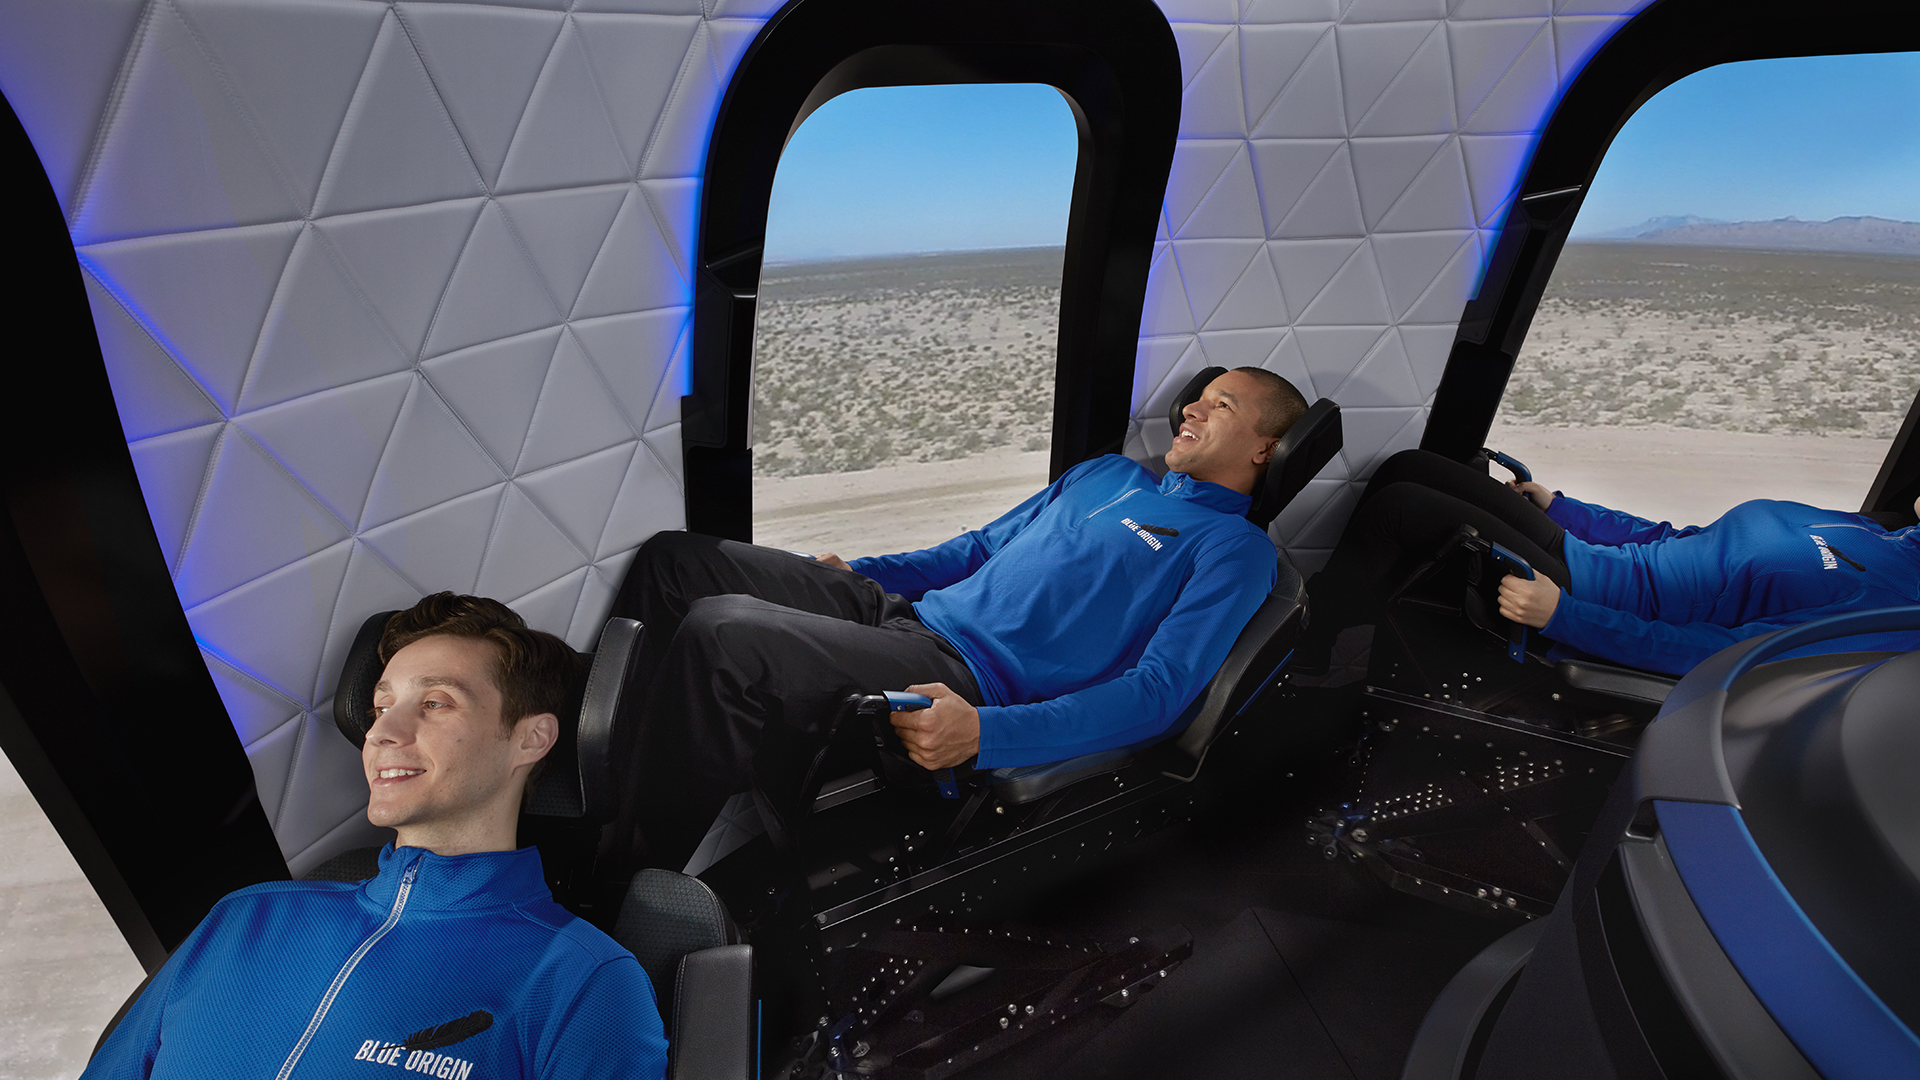 Blue Origin เปิดให้ลงทะเบียนรับข้อมูลการจองที่นั่งเที่ยวบินอวกาศของจรวด New Shepard ผ่านเว็บไซต์